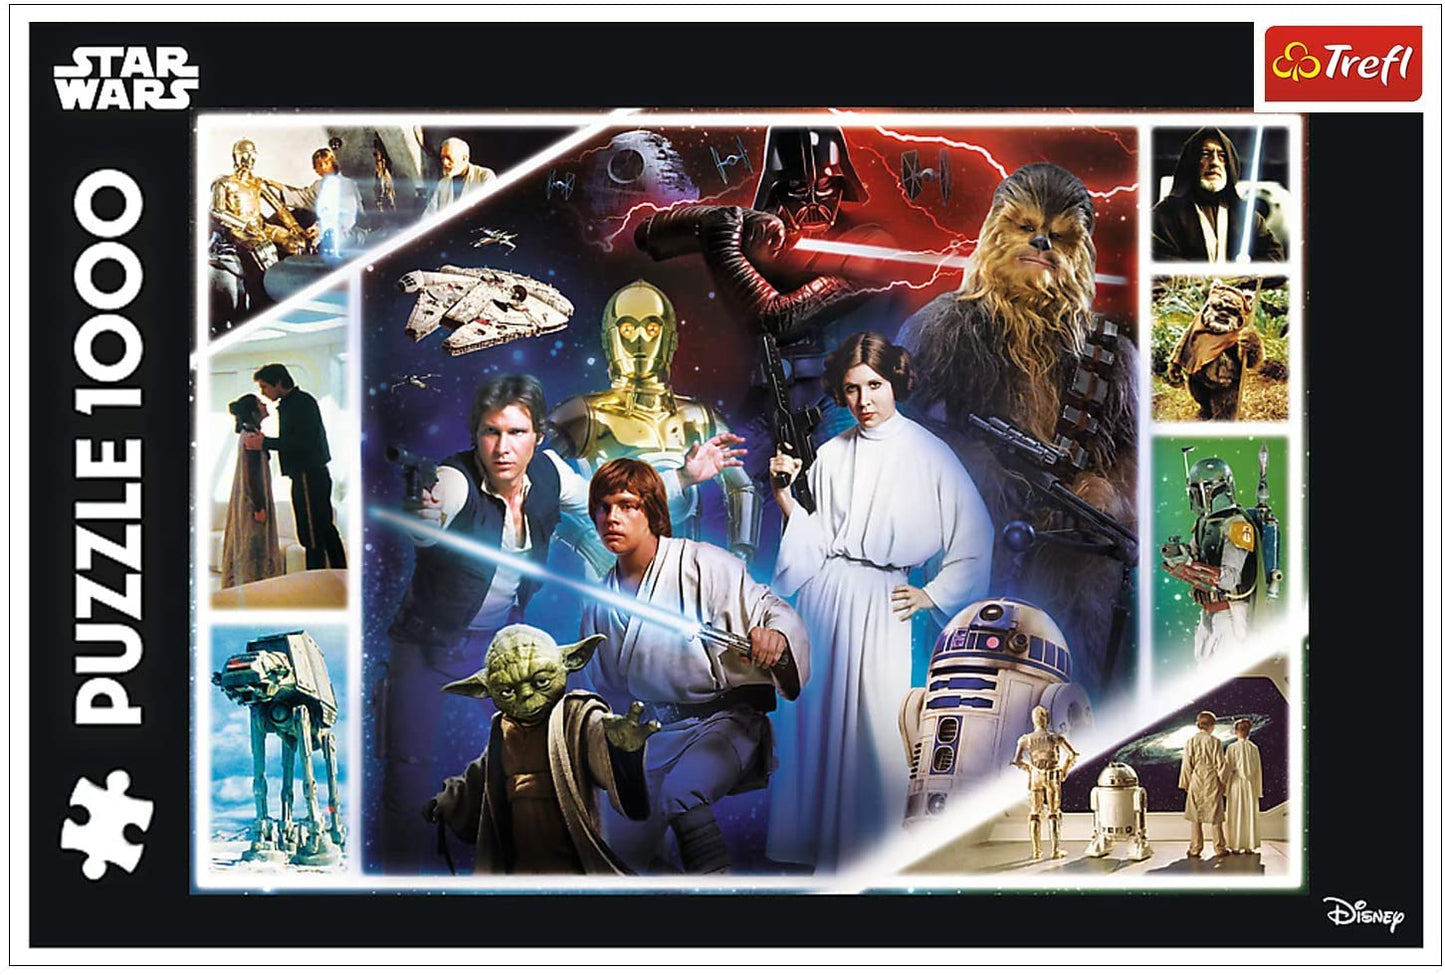 Star Wars by Lucas arts/Disney, 1000 Piece Puzzle